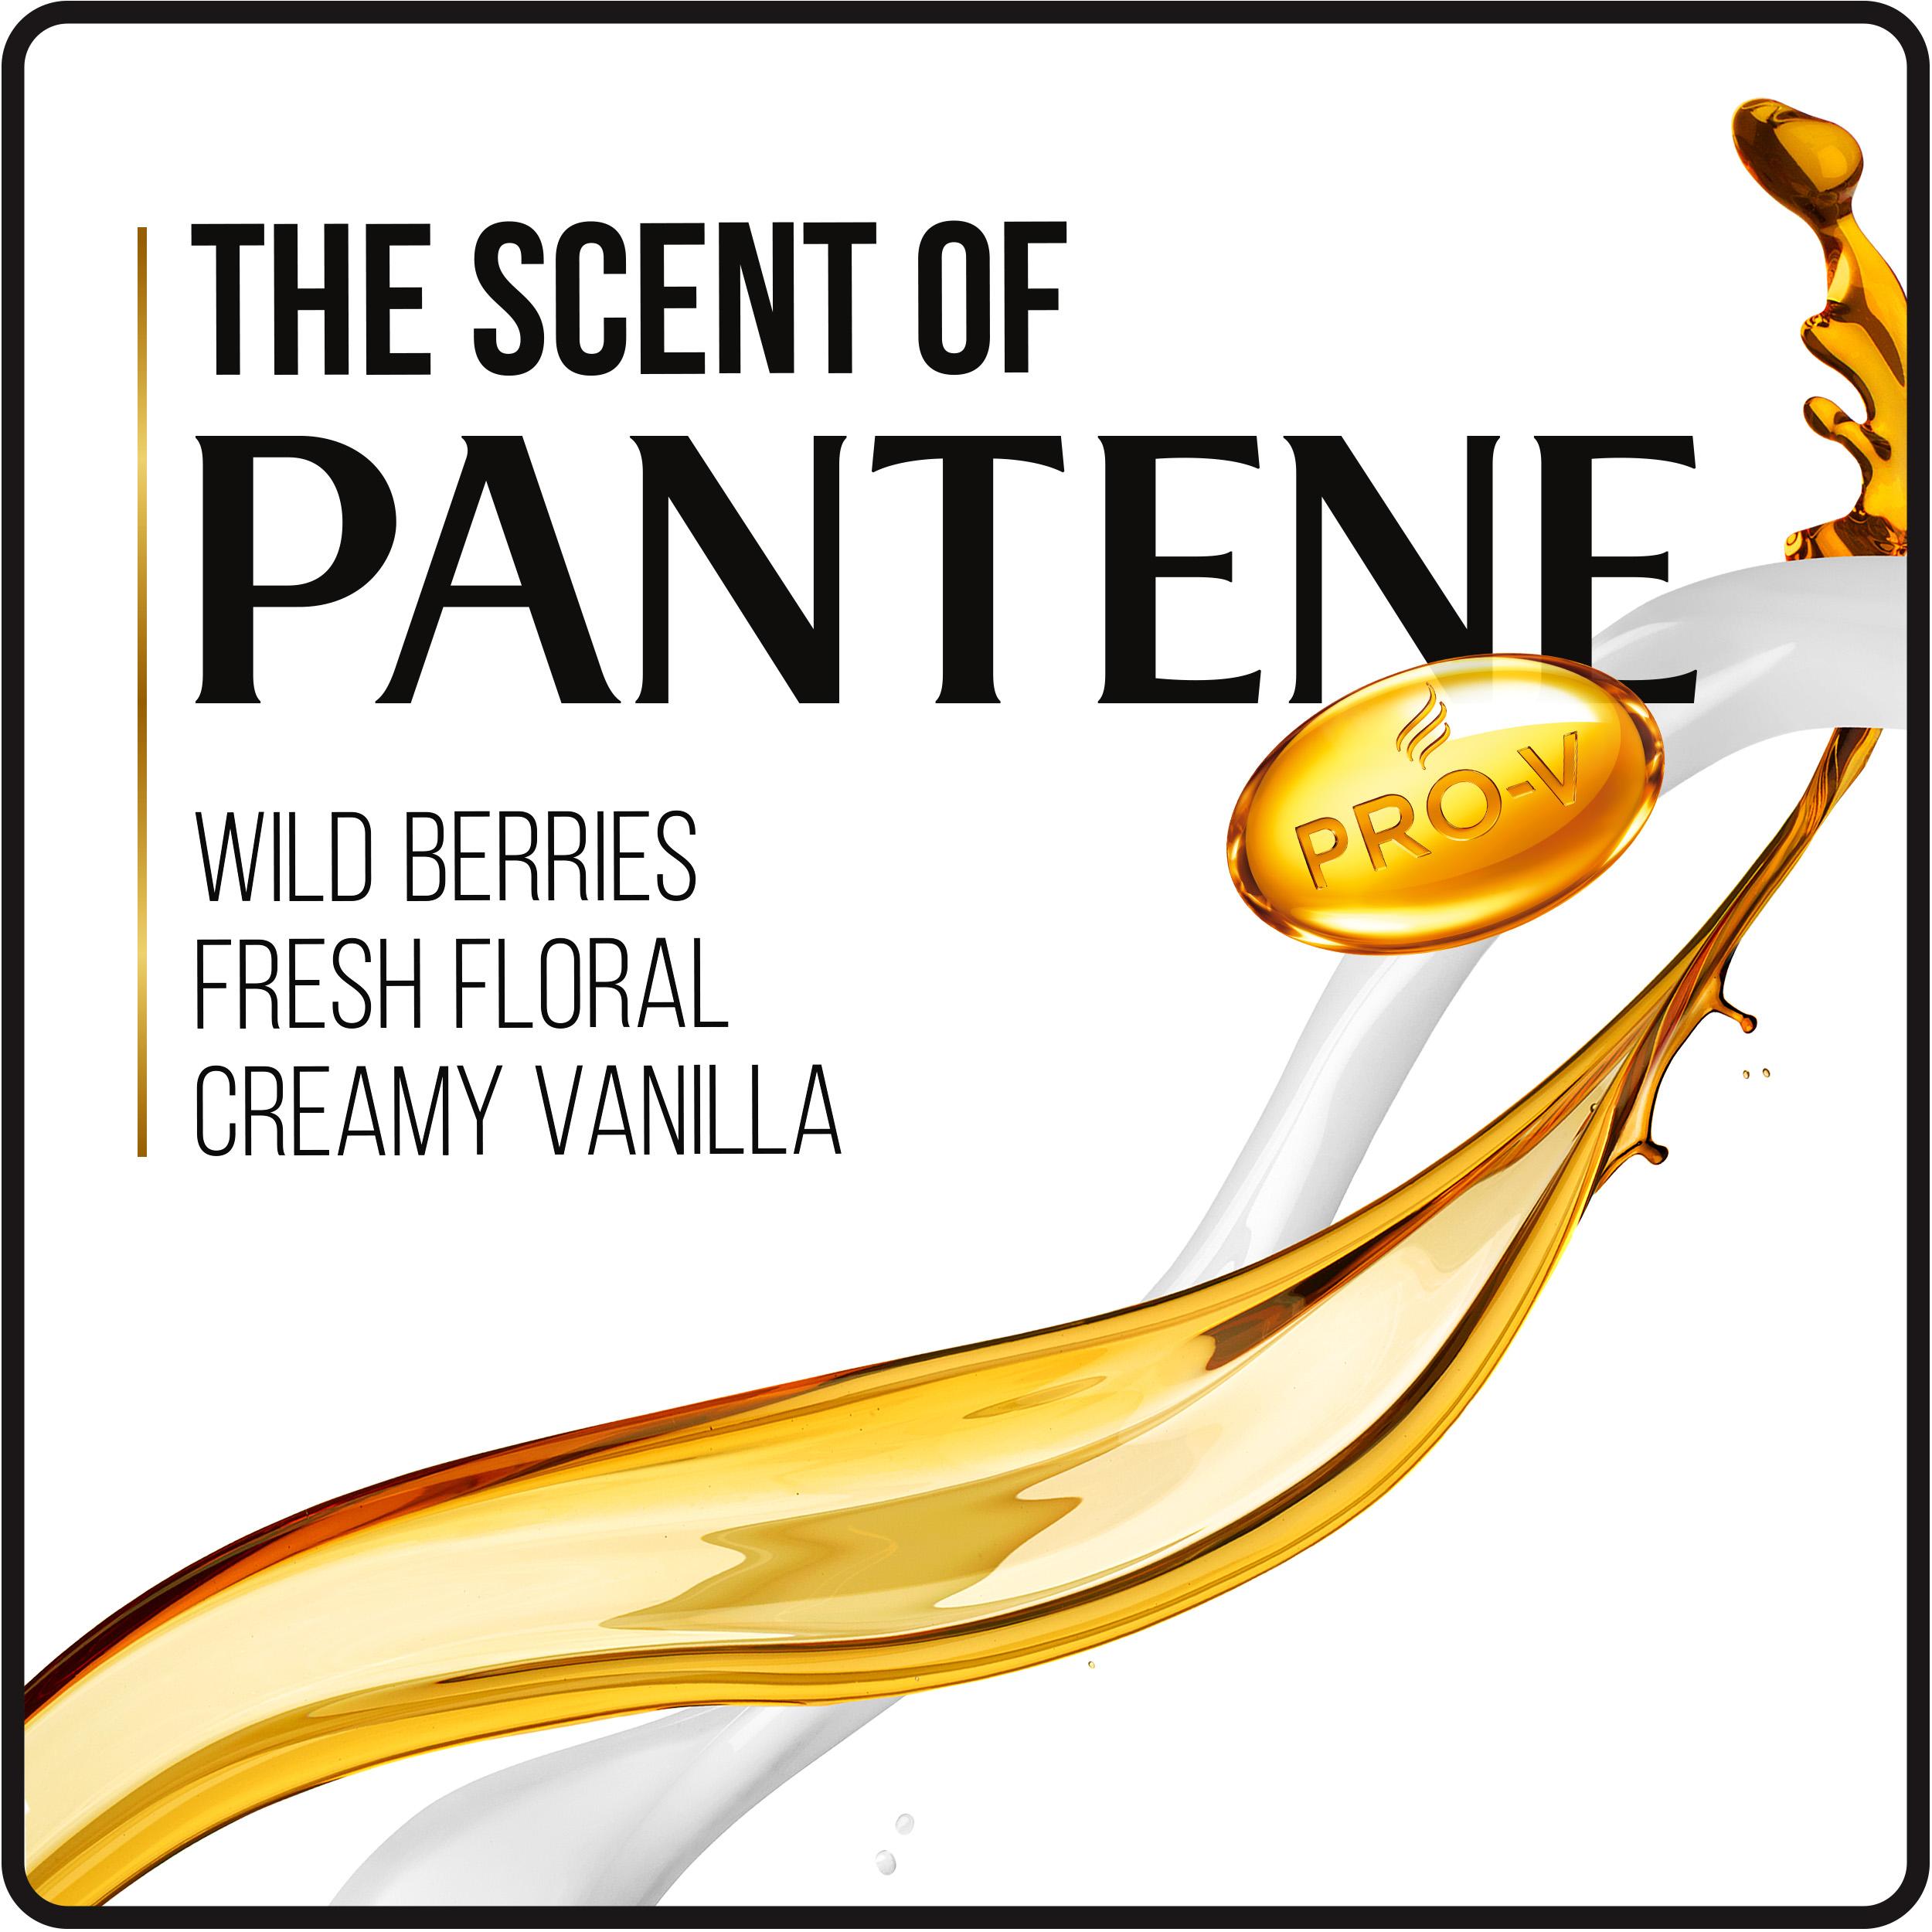 Pantene Pro-V Moisturizing nourishing Sheer Volume for Thin Hair Daily Conditioner, 28.9 fl oz - image 5 of 7